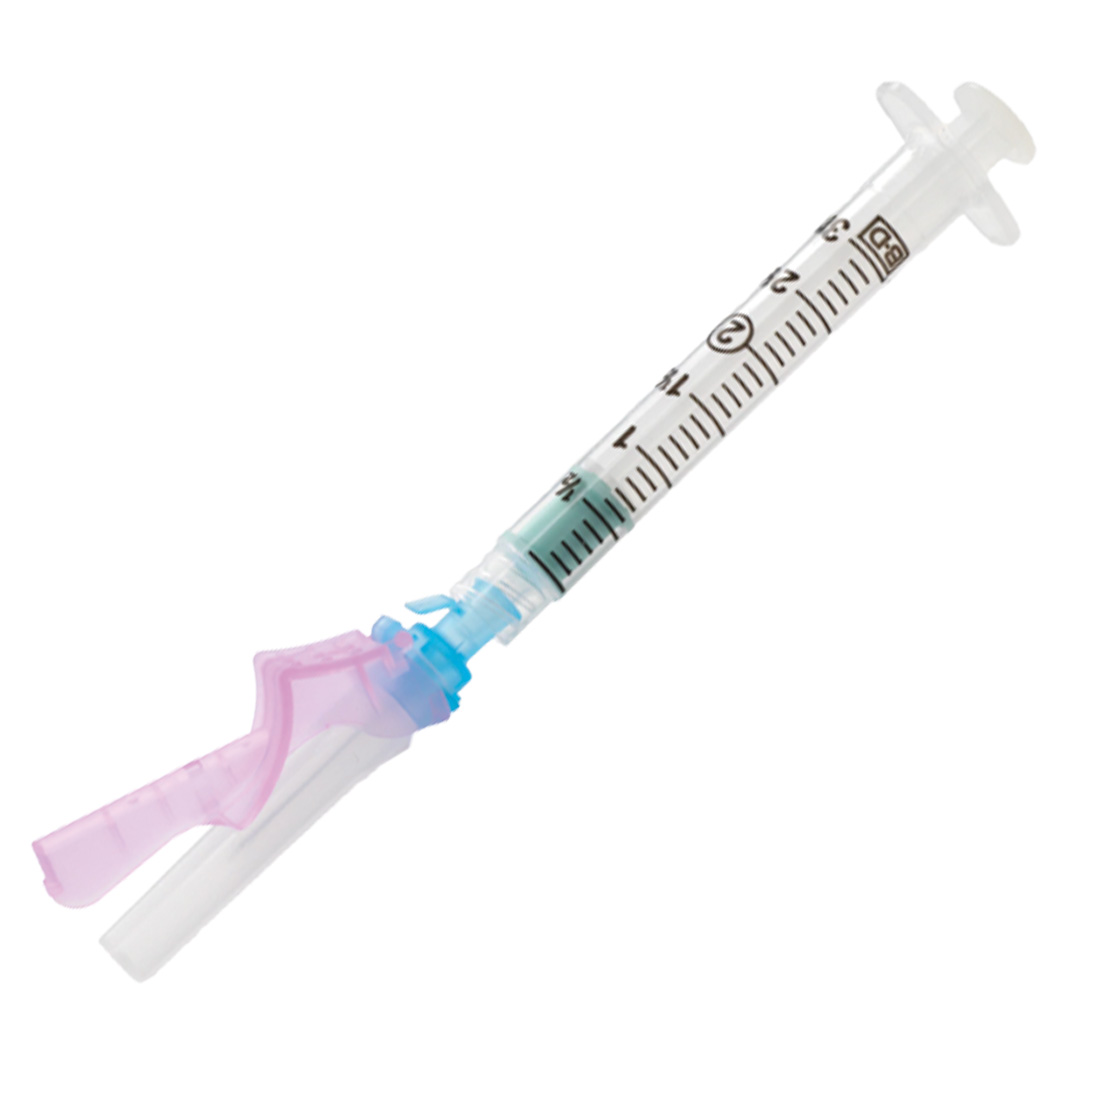 1 cc BD Luer-Lok™ Syringe w/25ga x 5/8" BD Eclipse™ Needle, Orange Hub - 50/Box